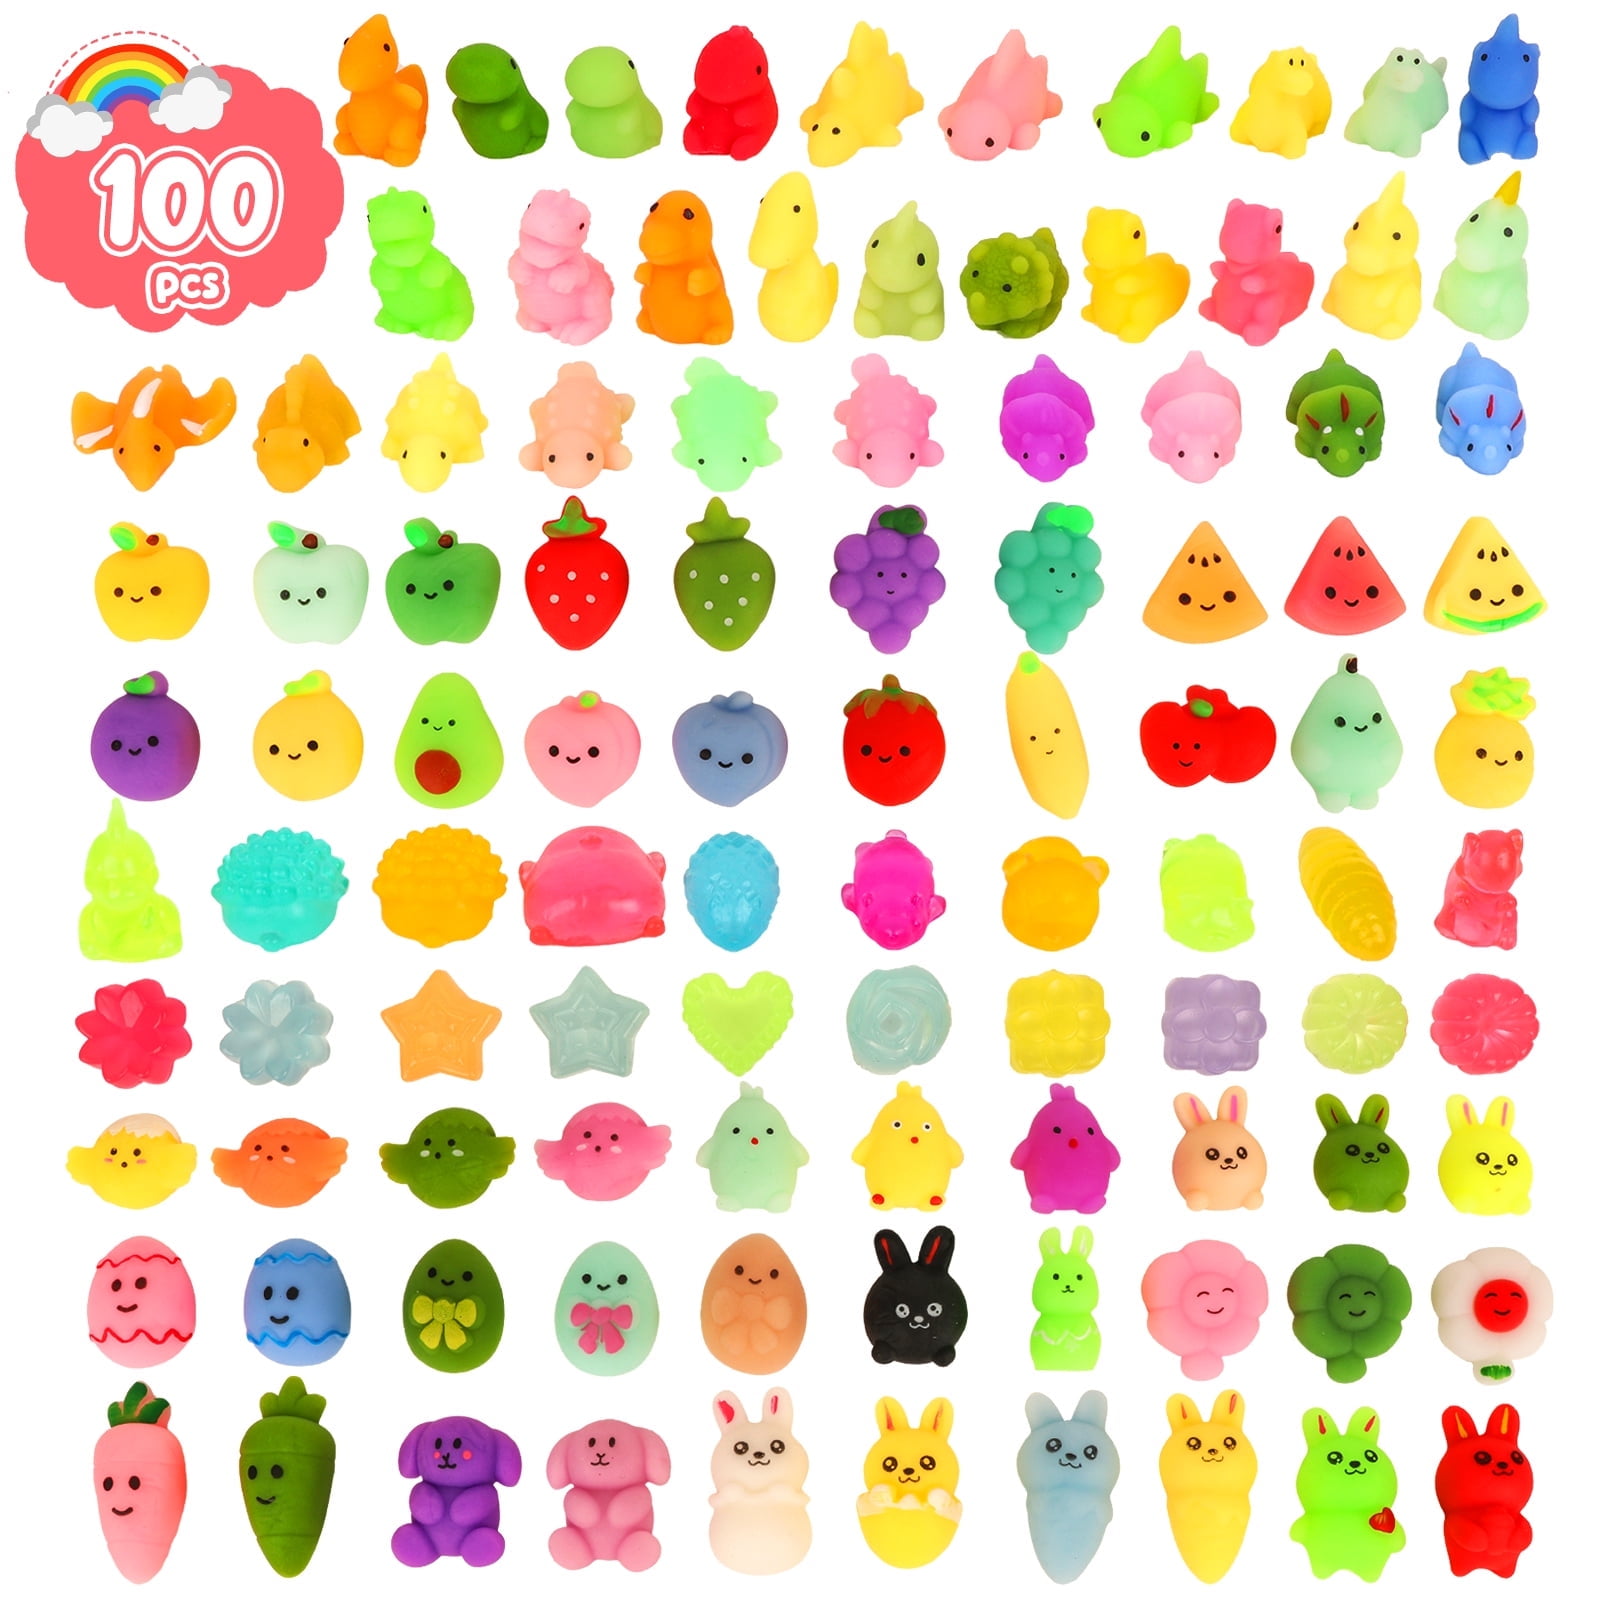 sqlhrke mochi squishy toys animals kawaii mini squishies 100 pack